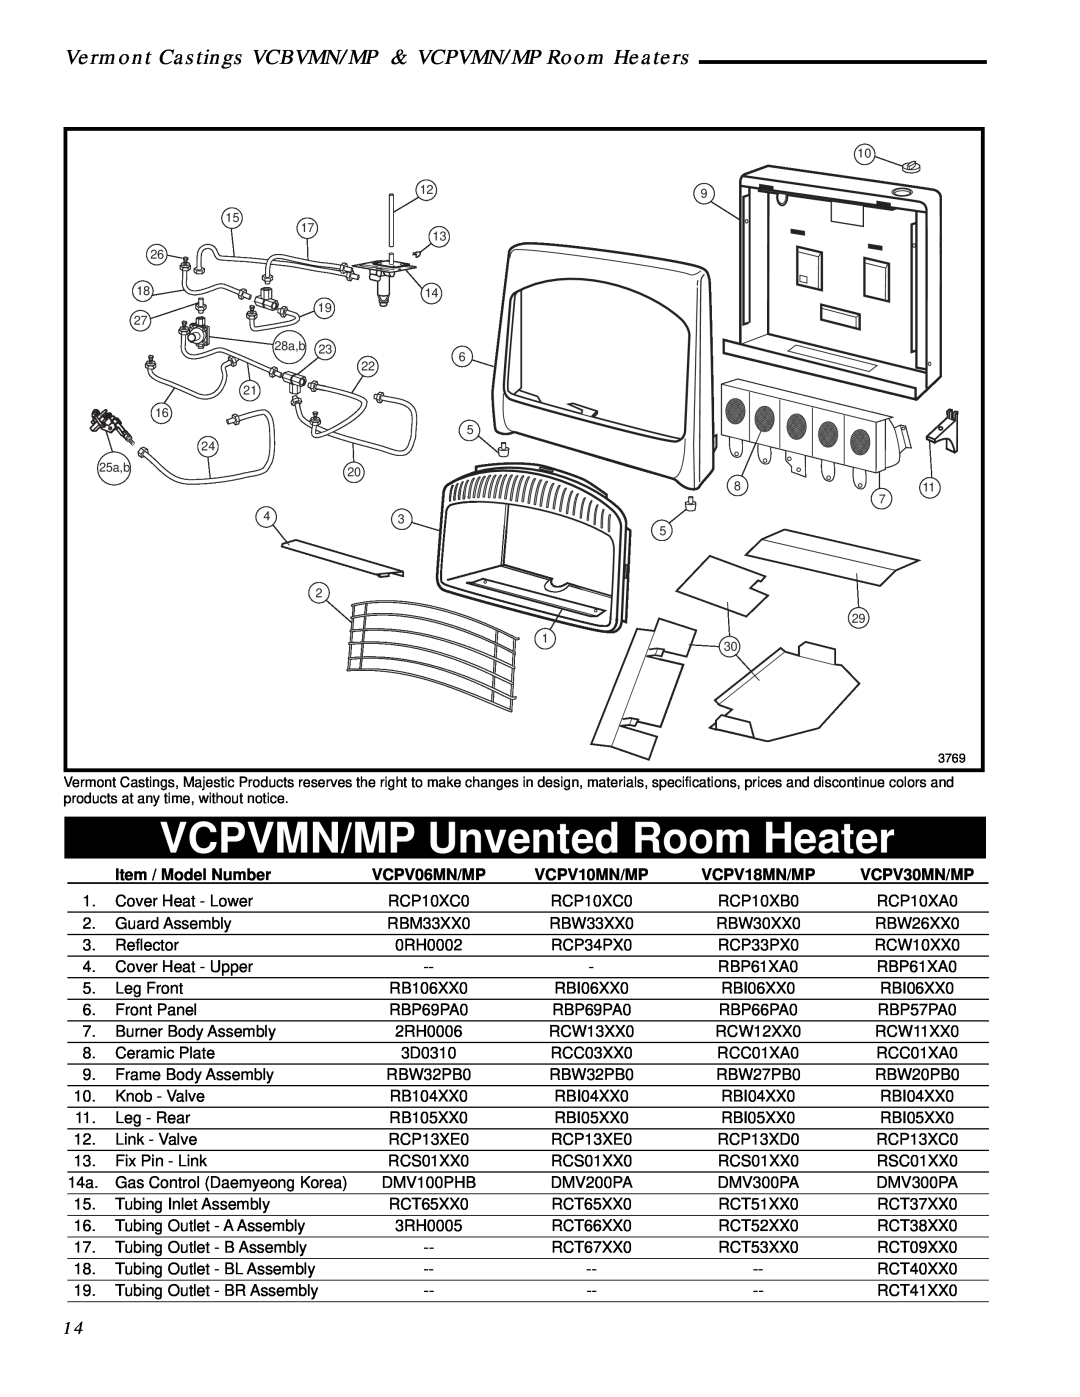 Vermont Casting VCPV30, VCBV30 VCPVMN/MP Unvented Room Heater, Item / Model Number, VCPV06MN/MP, VCPV10MN/MP, VCPV18MN/MP 